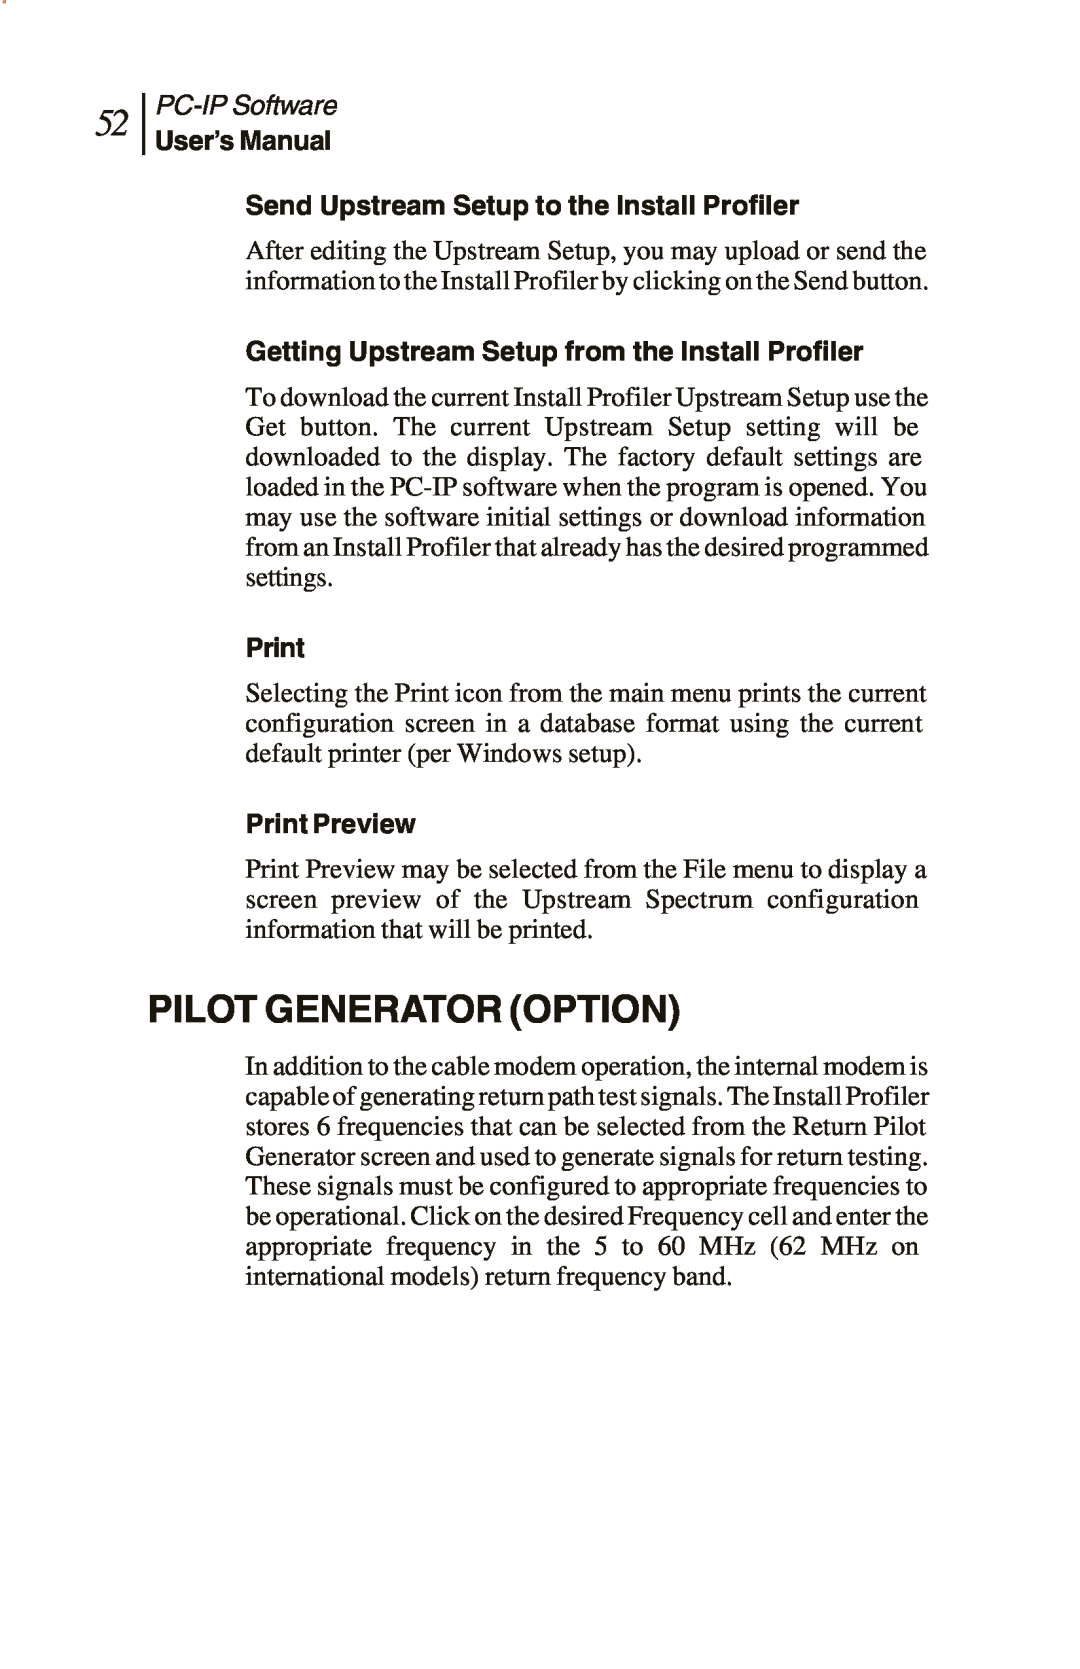 Sunrise Global and CM500 IP Pilot Generator Option, Send Upstream Setup to the Install Profiler, PC-IPSoftware, Print 